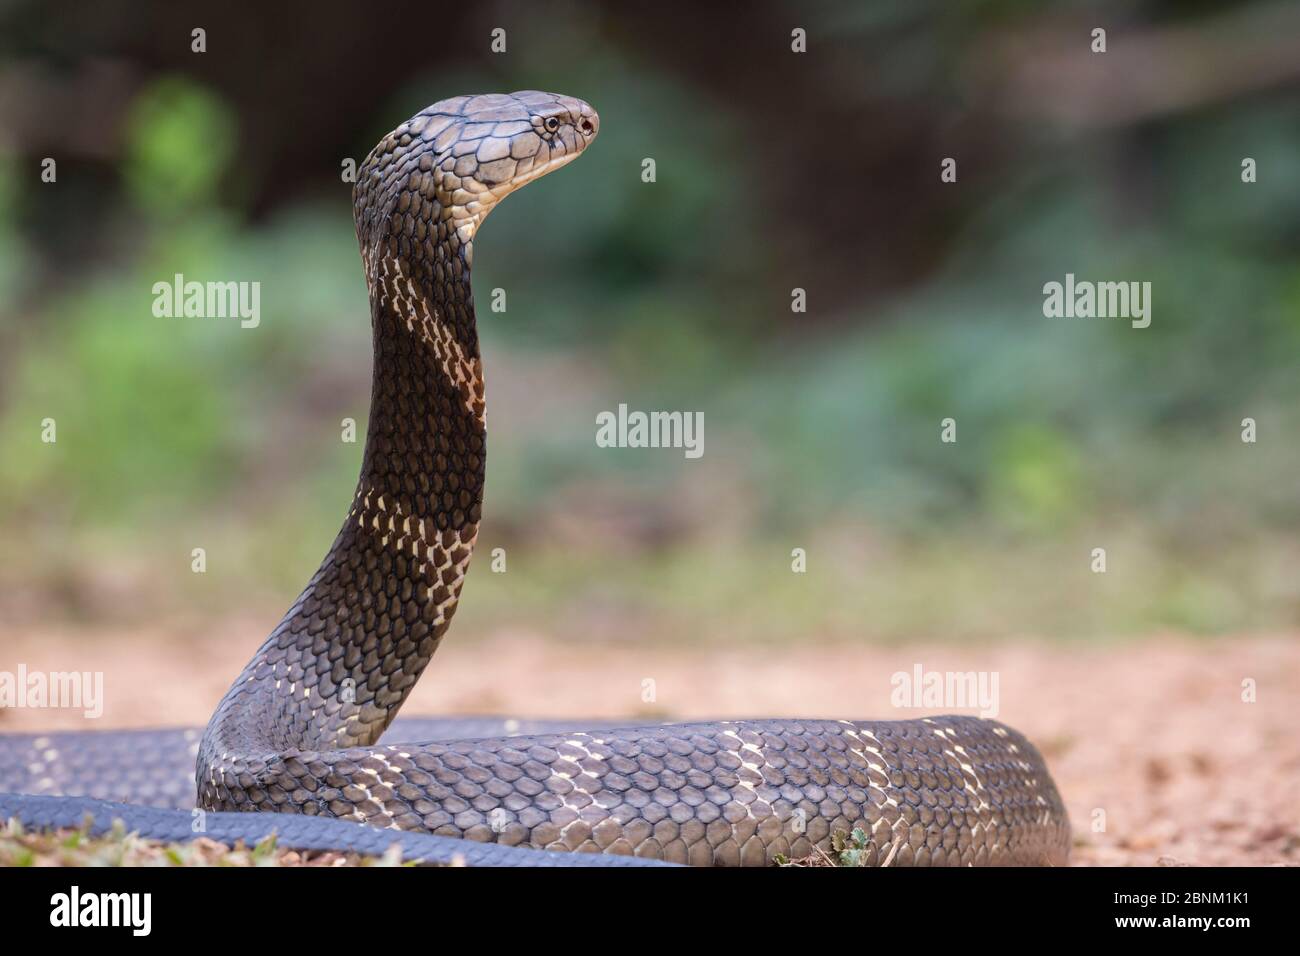 King cobra (Ophiophagus Hannah) with head raised, Agumbe, Karnataka, India. Venomous species. Stock Photo